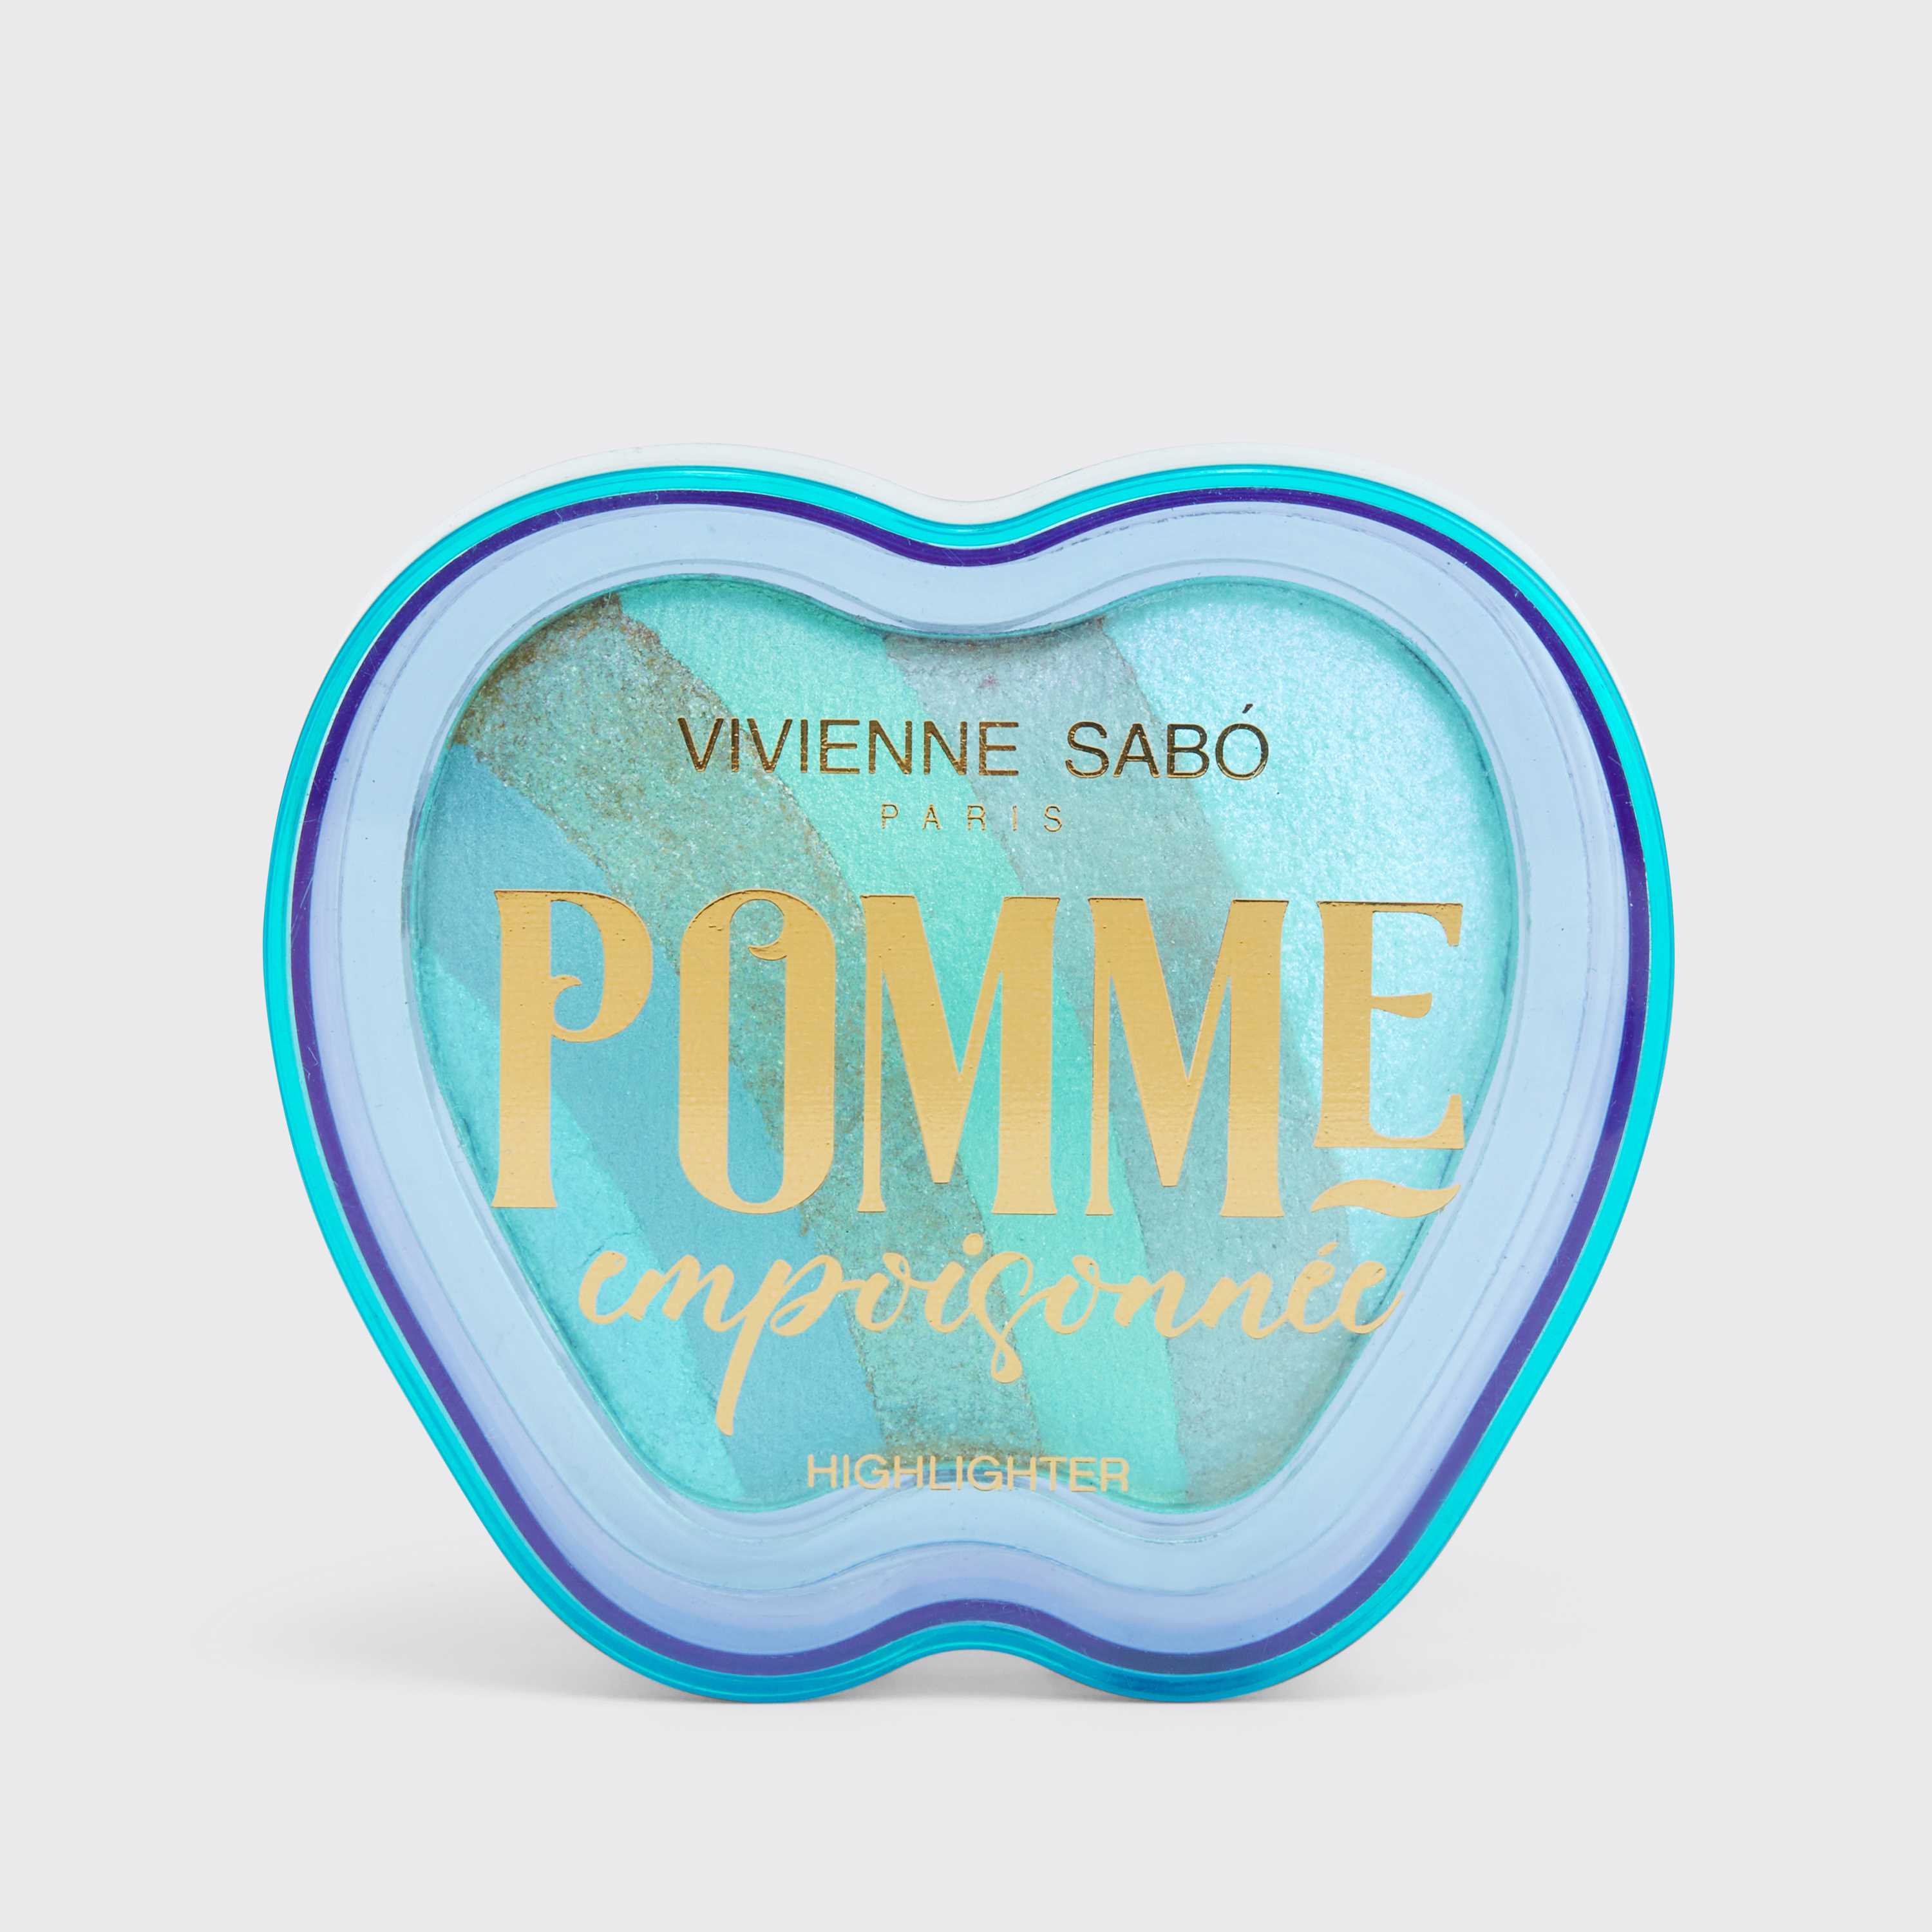 Vivienne Sabo - Highlighter for Face - Pomme Empoisonnee